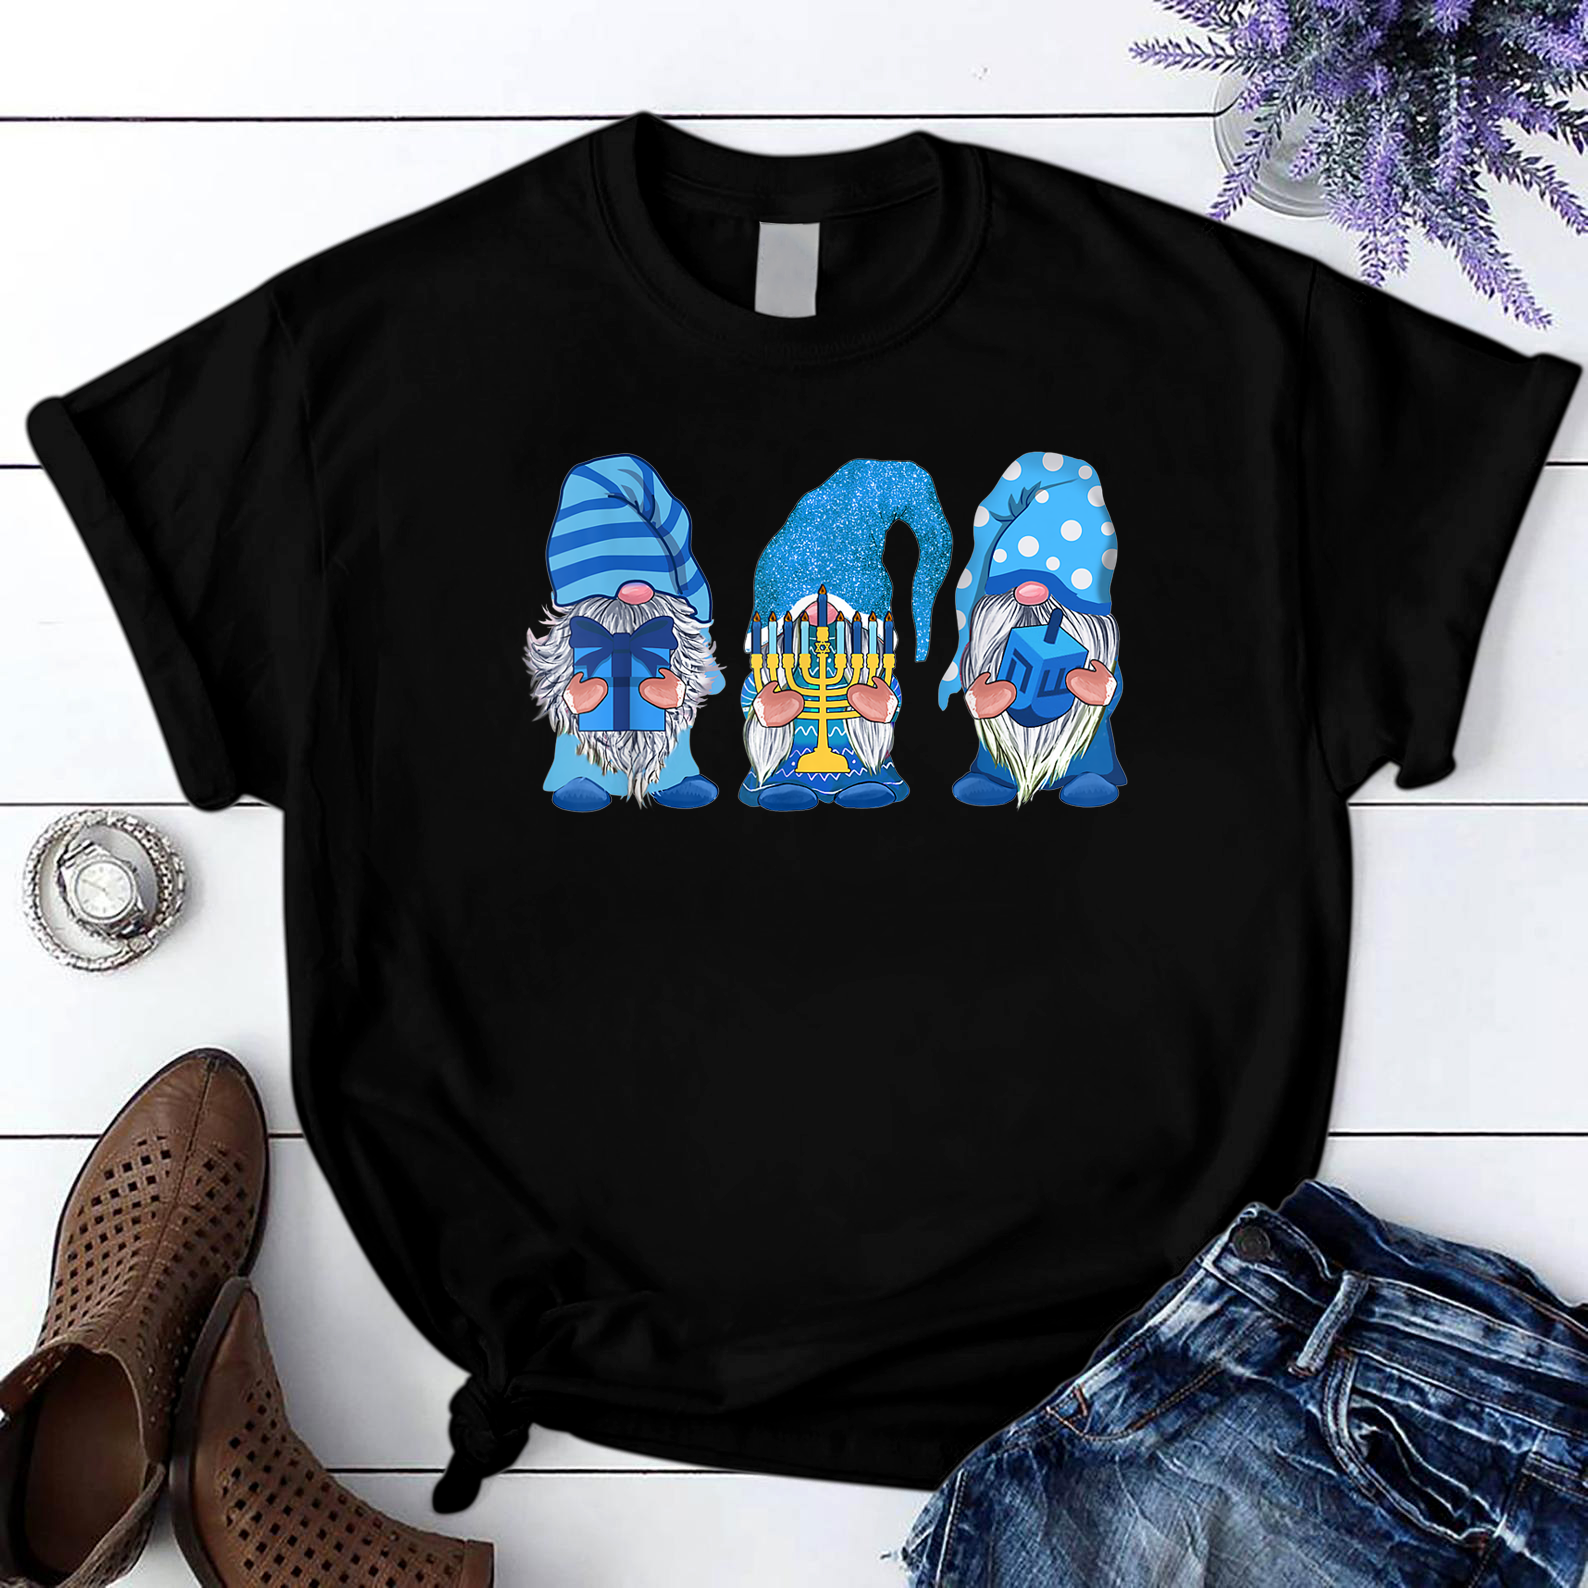 Hanukkah Gnomes Funny Gift Cute Gnomies With Menorah T Shirt Black Unisex S-6XL